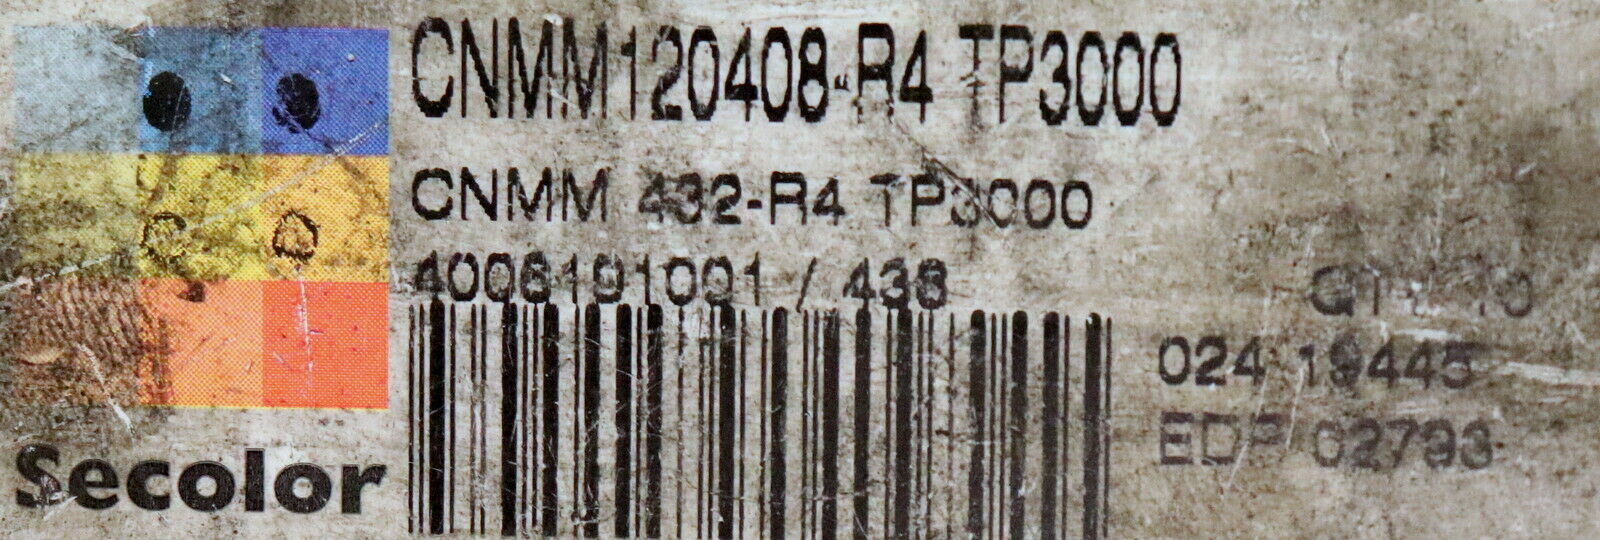 SECO 6 Stück Wendeplatten CNMM120408-R4 TP3000 QTY10